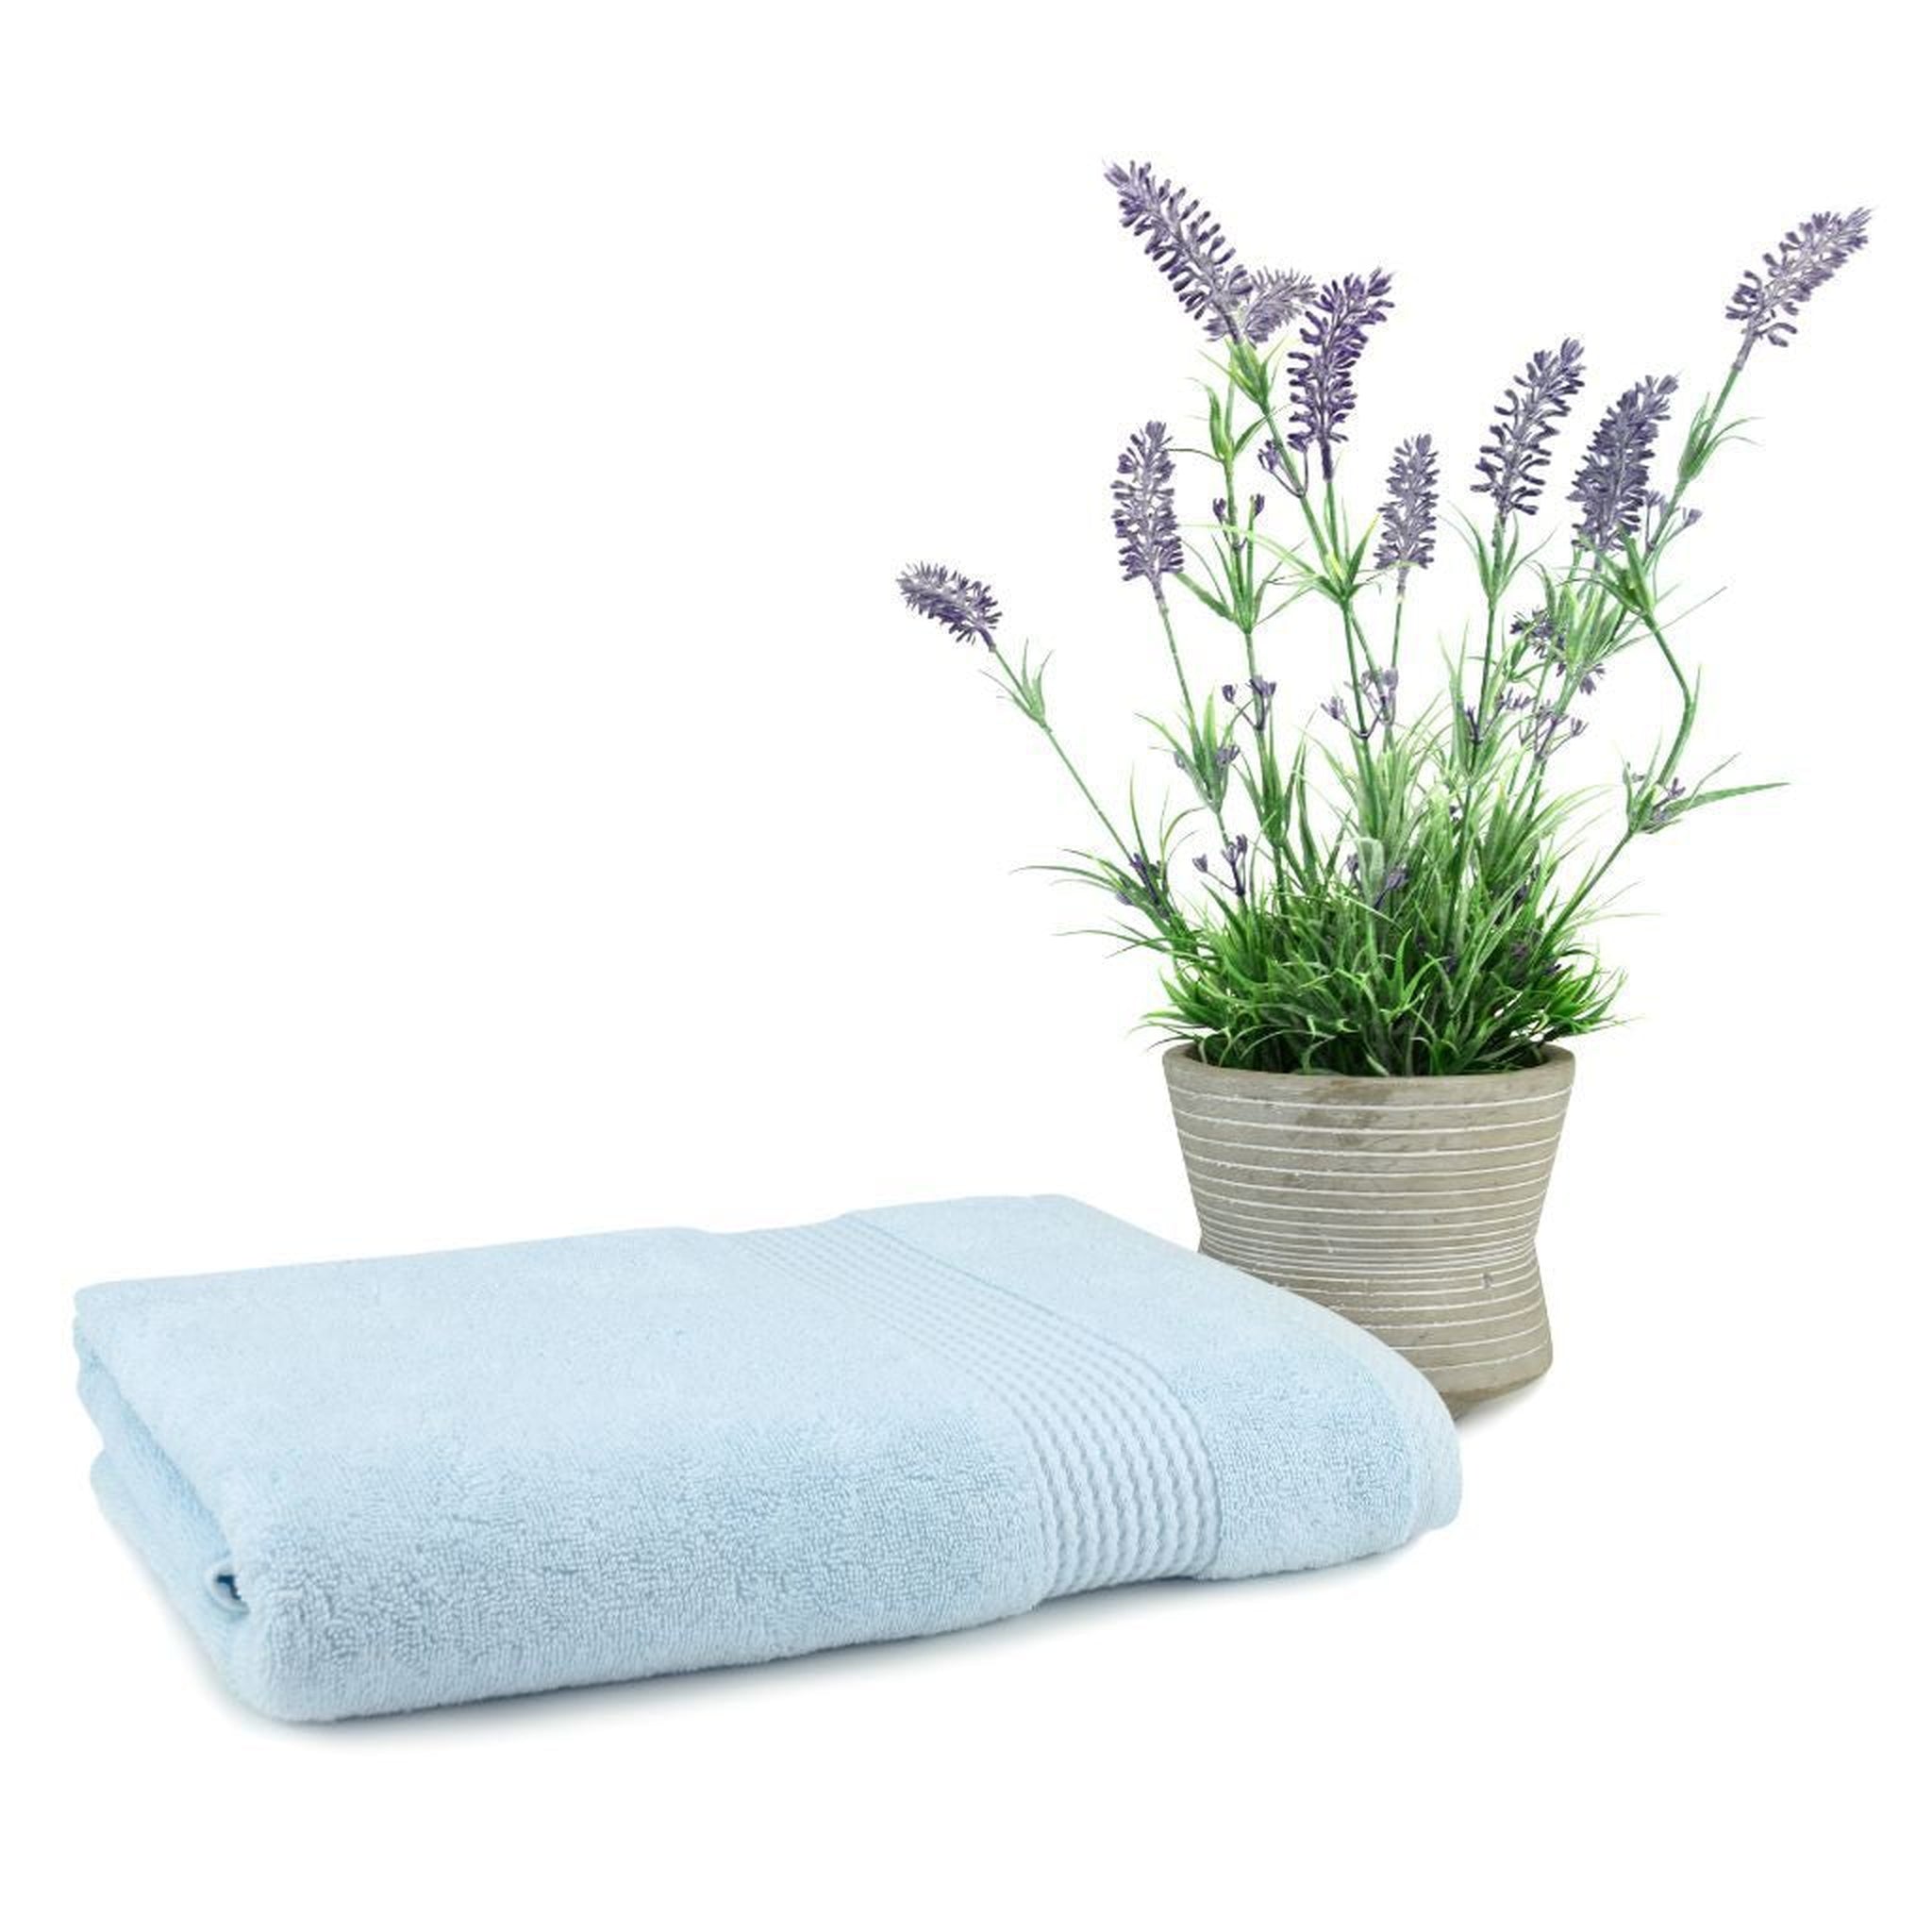 East`N Blue, East`N Blue Lara Turkish Cotton Ice Blue Bath Towel